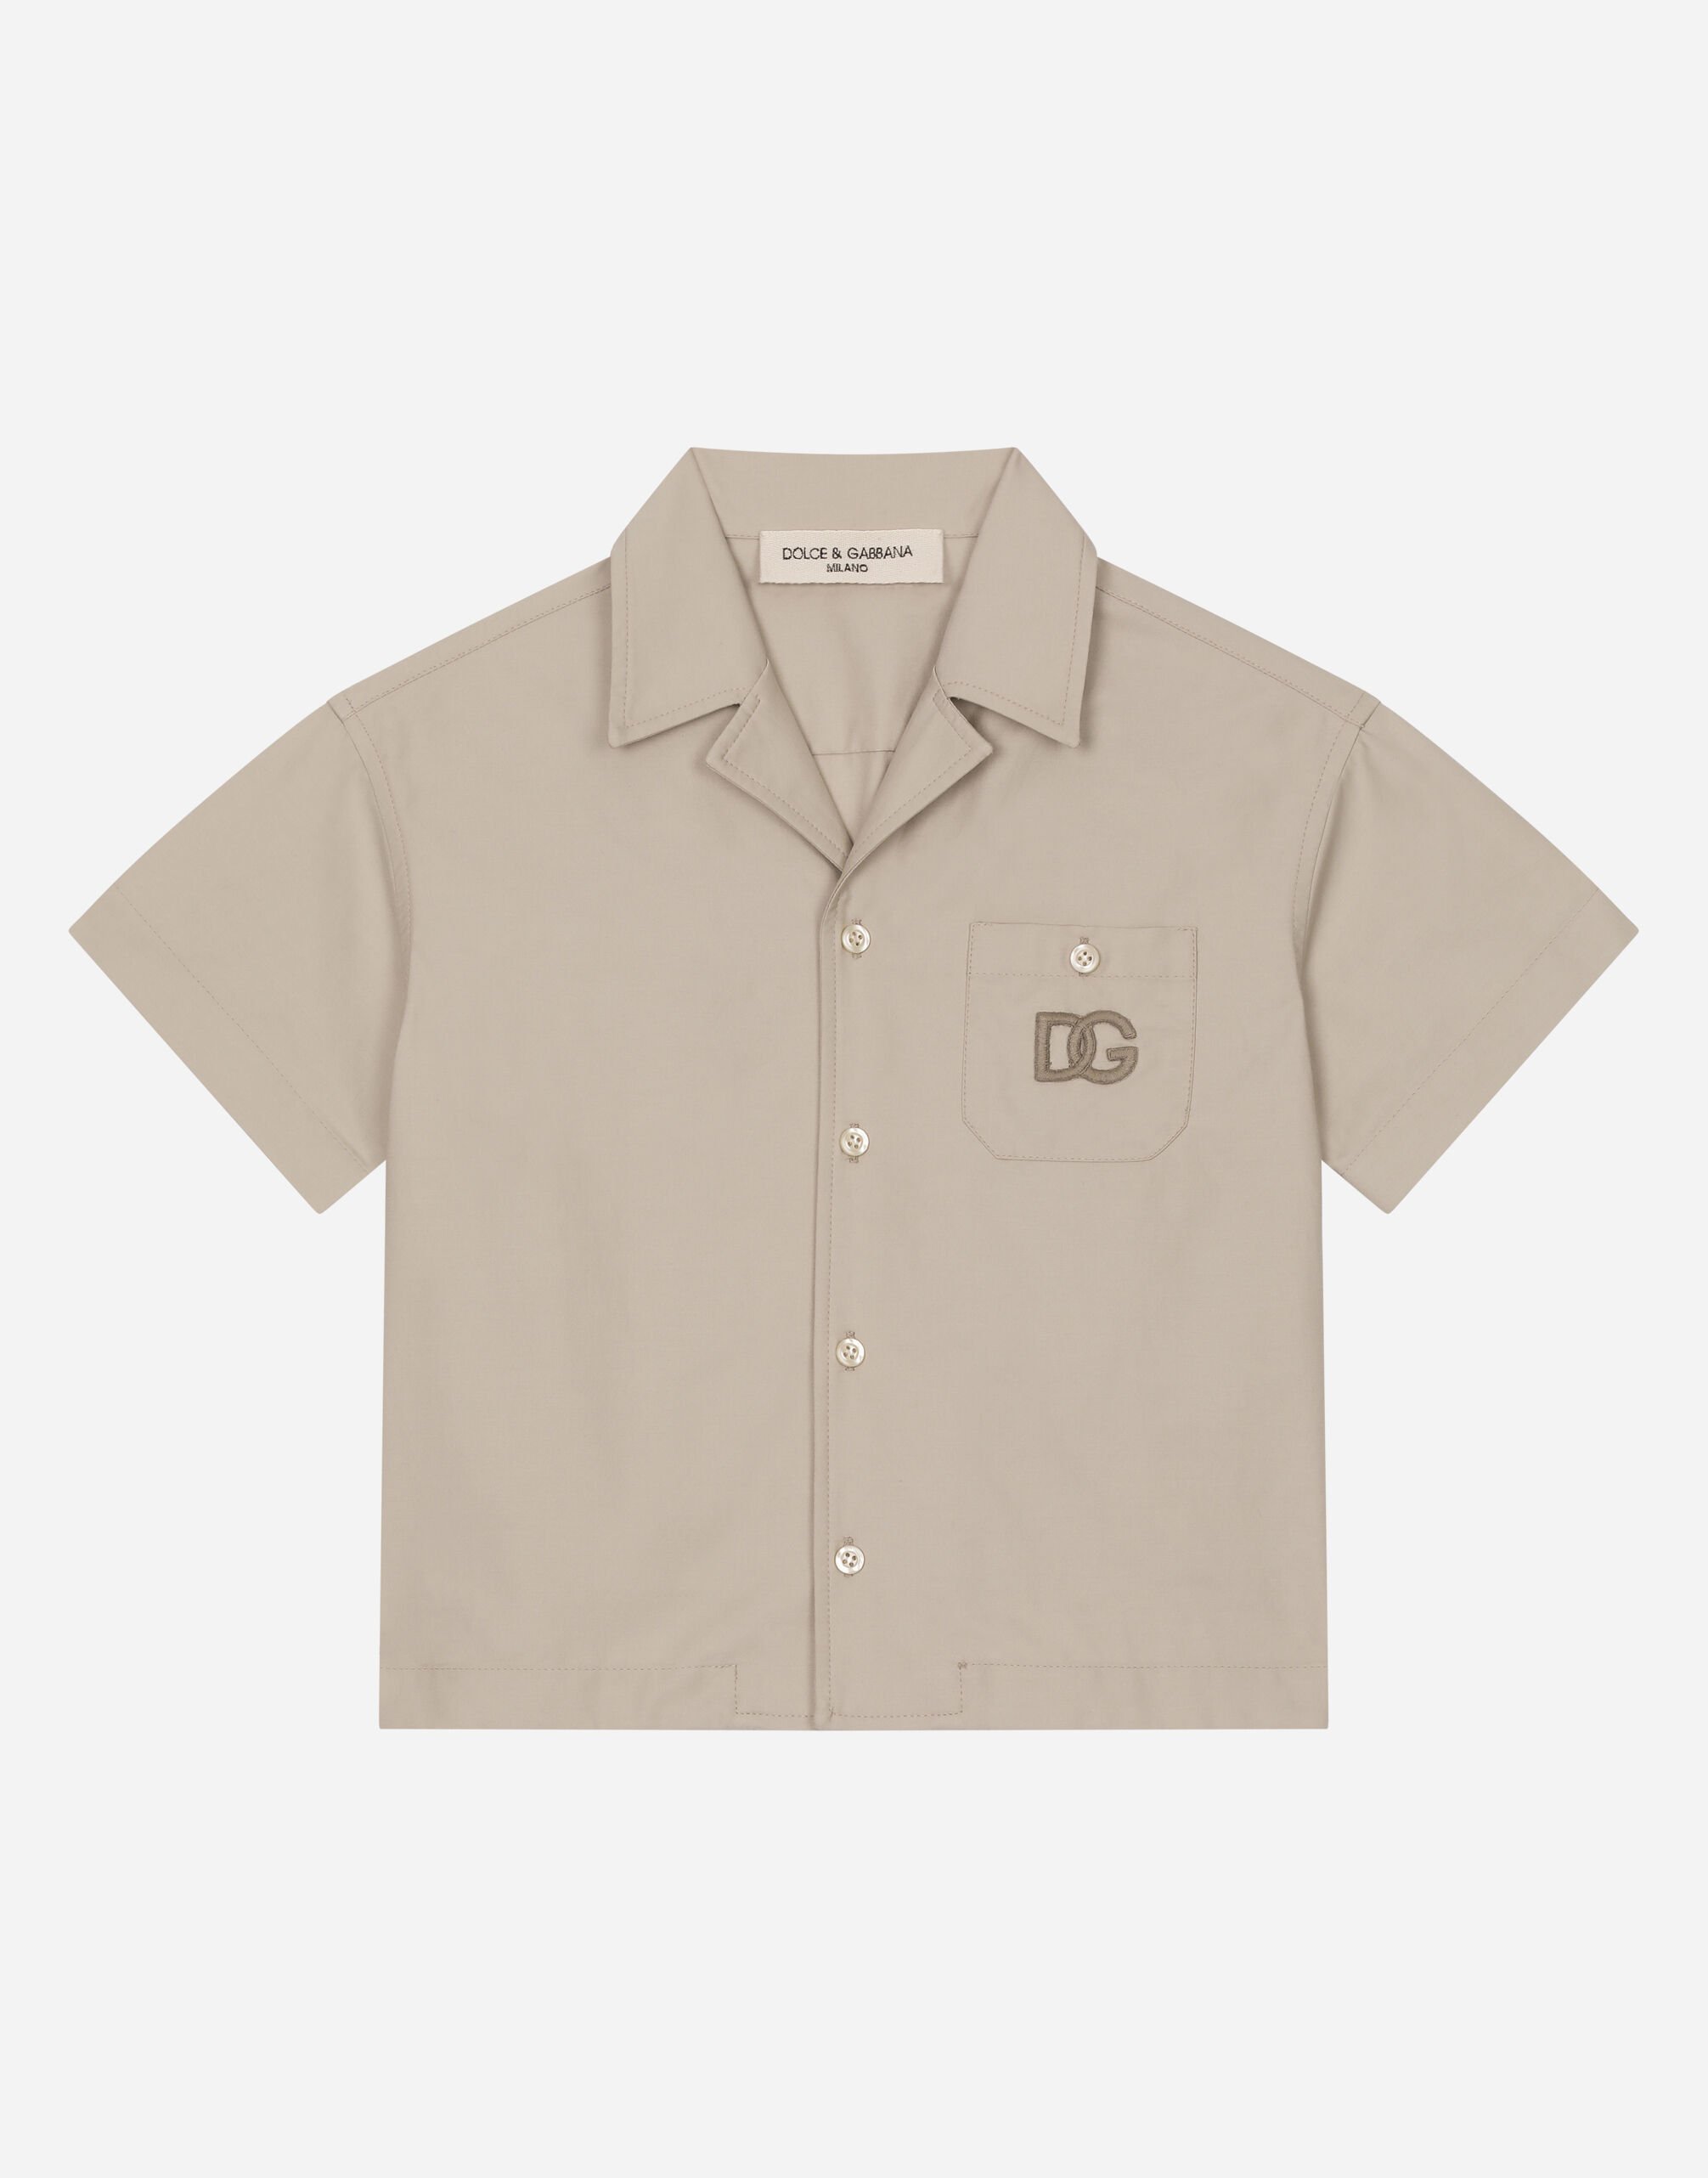 Dolce & Gabbana Drill shirt with DG logo patch Print L4JTHQG7L7H